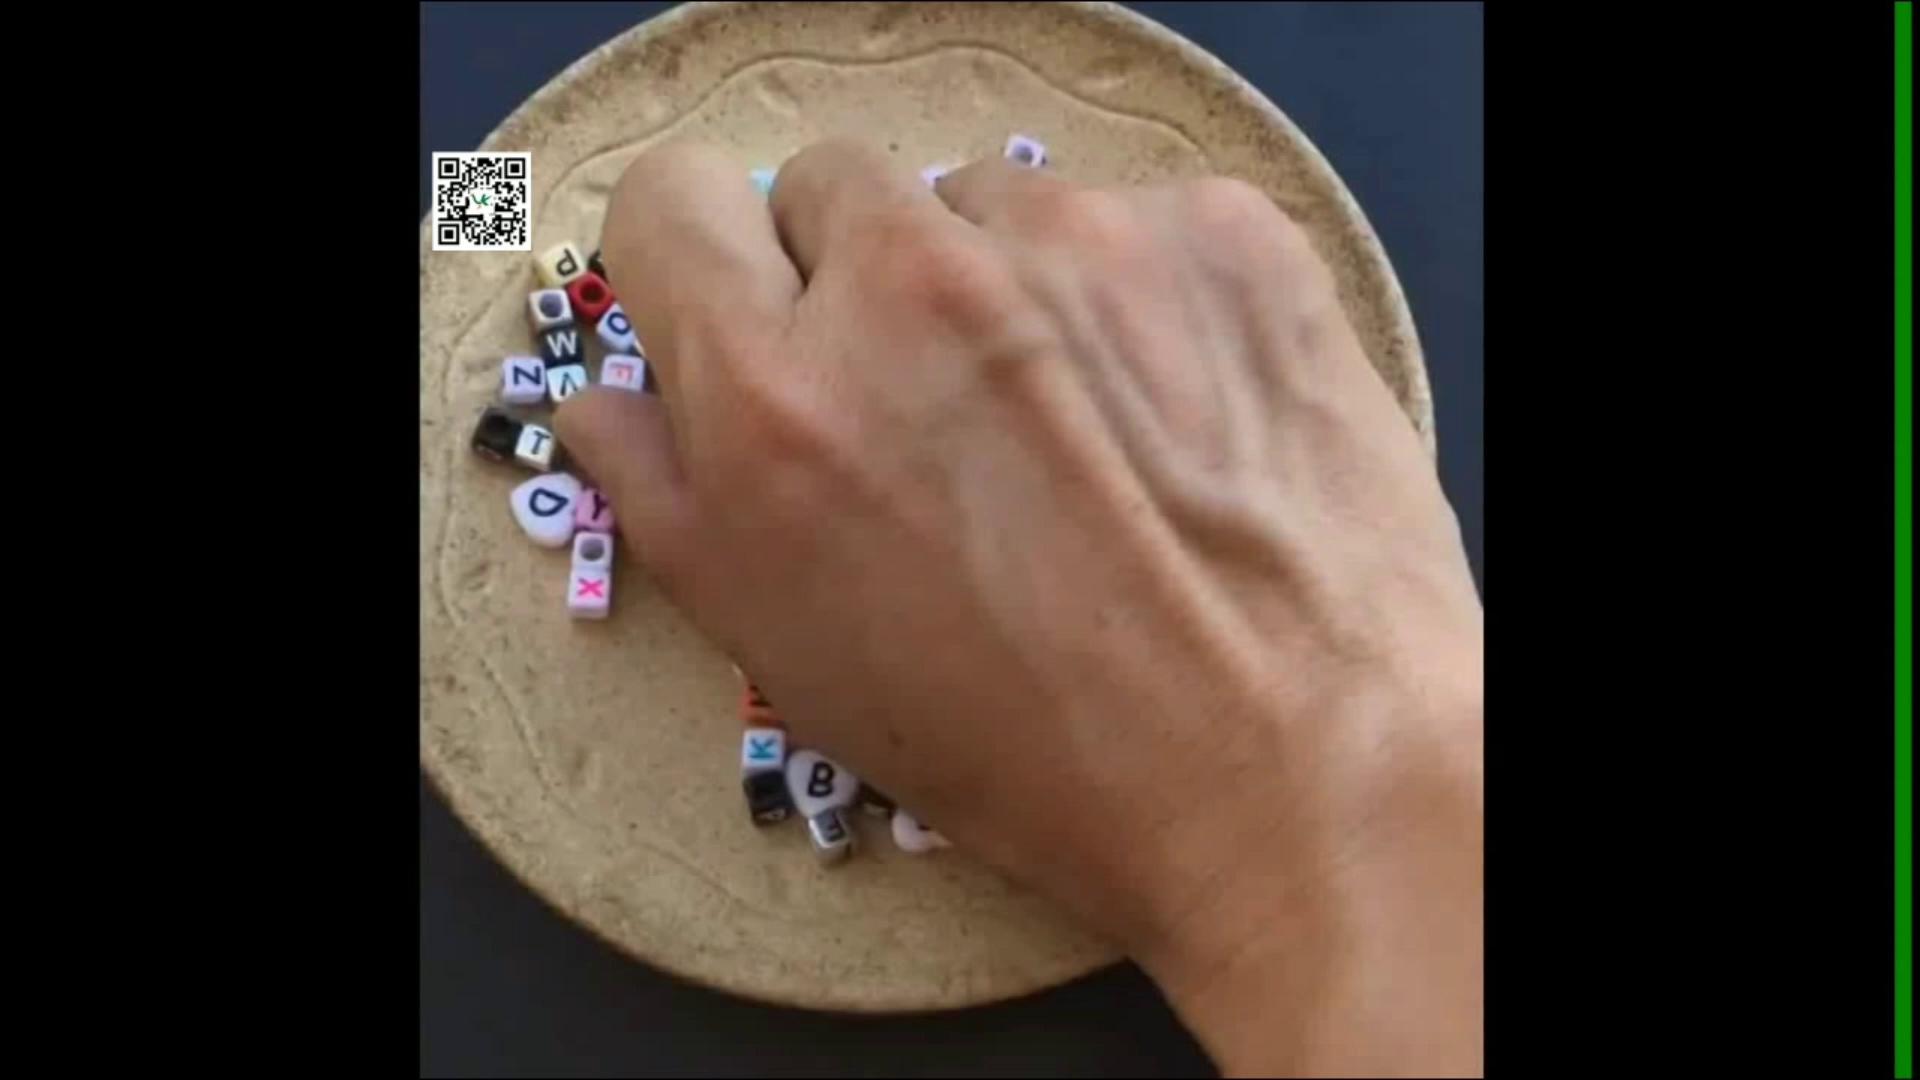 Cheap white square 6mm 7mm 10mm plastic letter beads handmade DIY accessories alphabet beads.